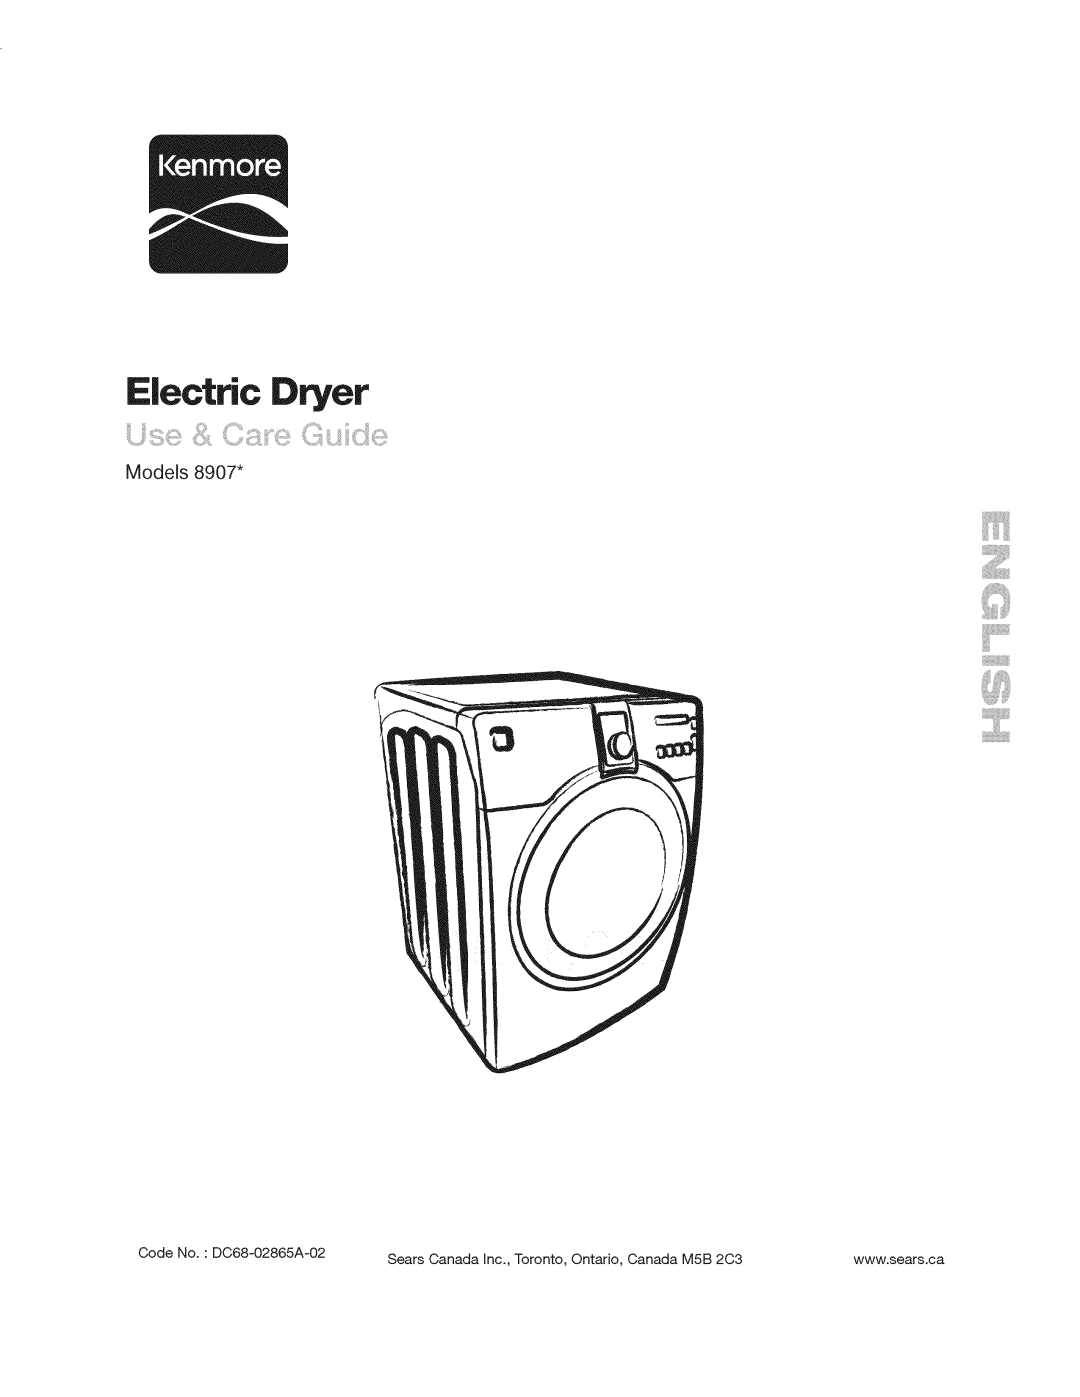 Kenmore 8907 manual Electric Dryer 